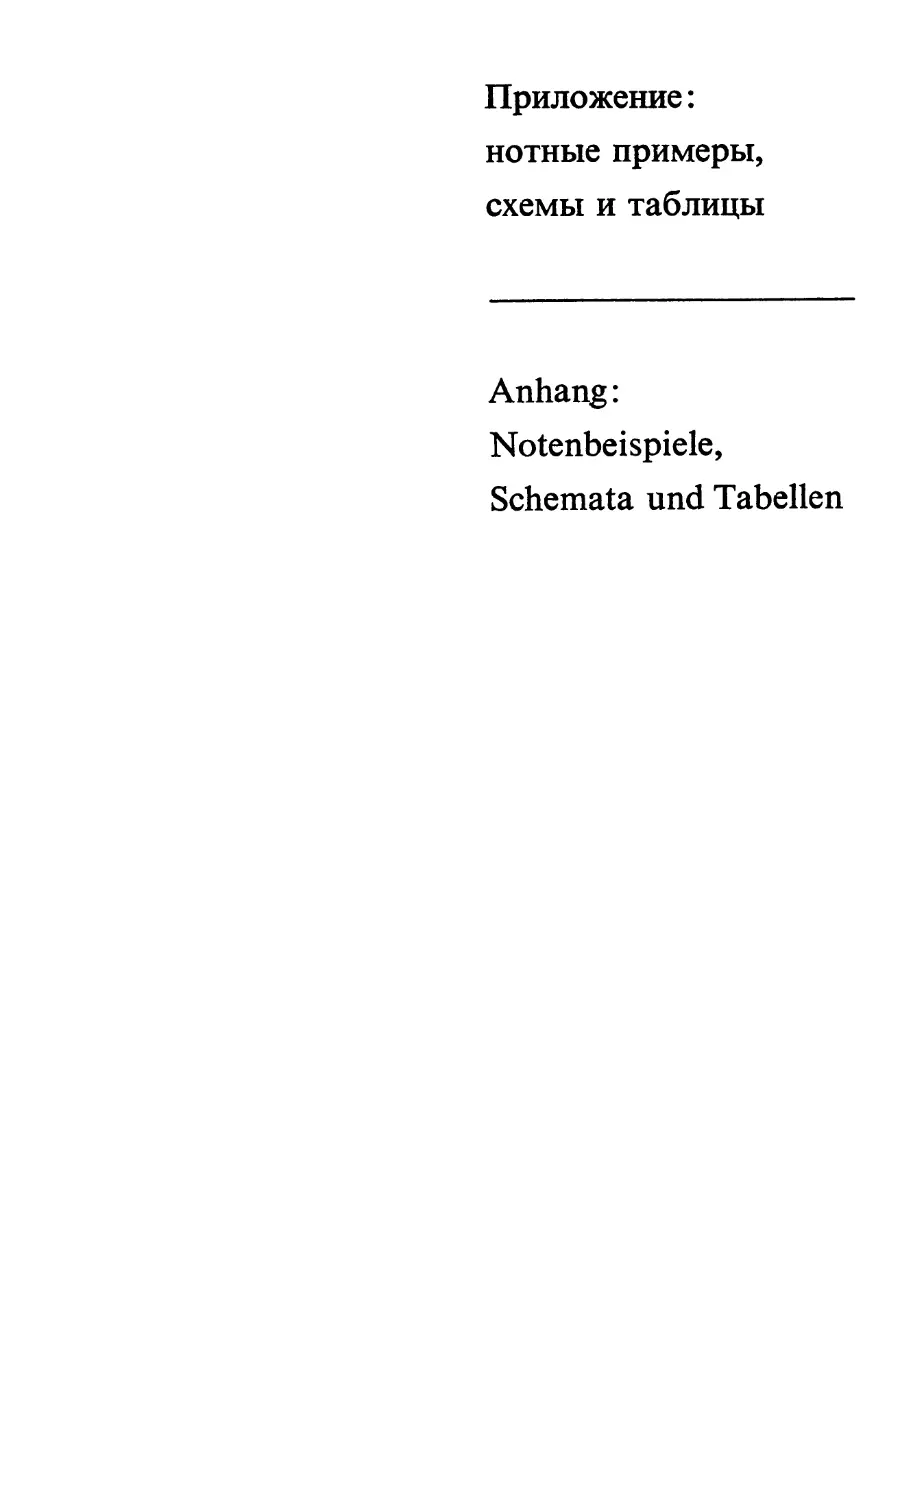 Приложение: нотные примеры, схемы и таблицы
Anhang: Notenbeispiele, Schemata und Tabellen